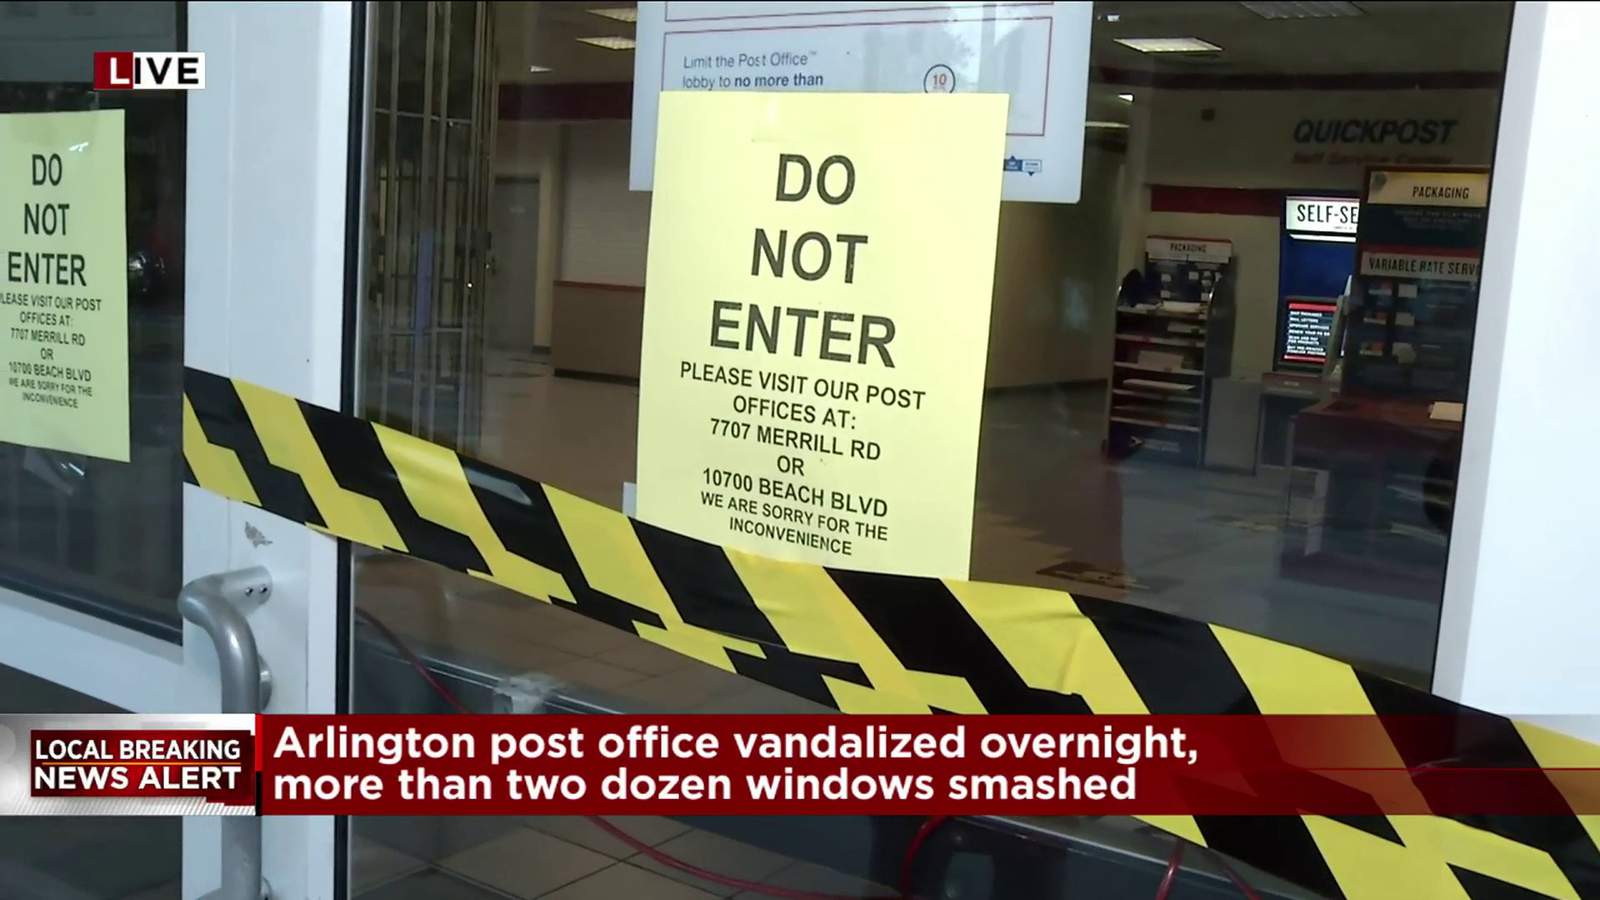 More than 24 windows broke at Jacksonville Post Office overnight